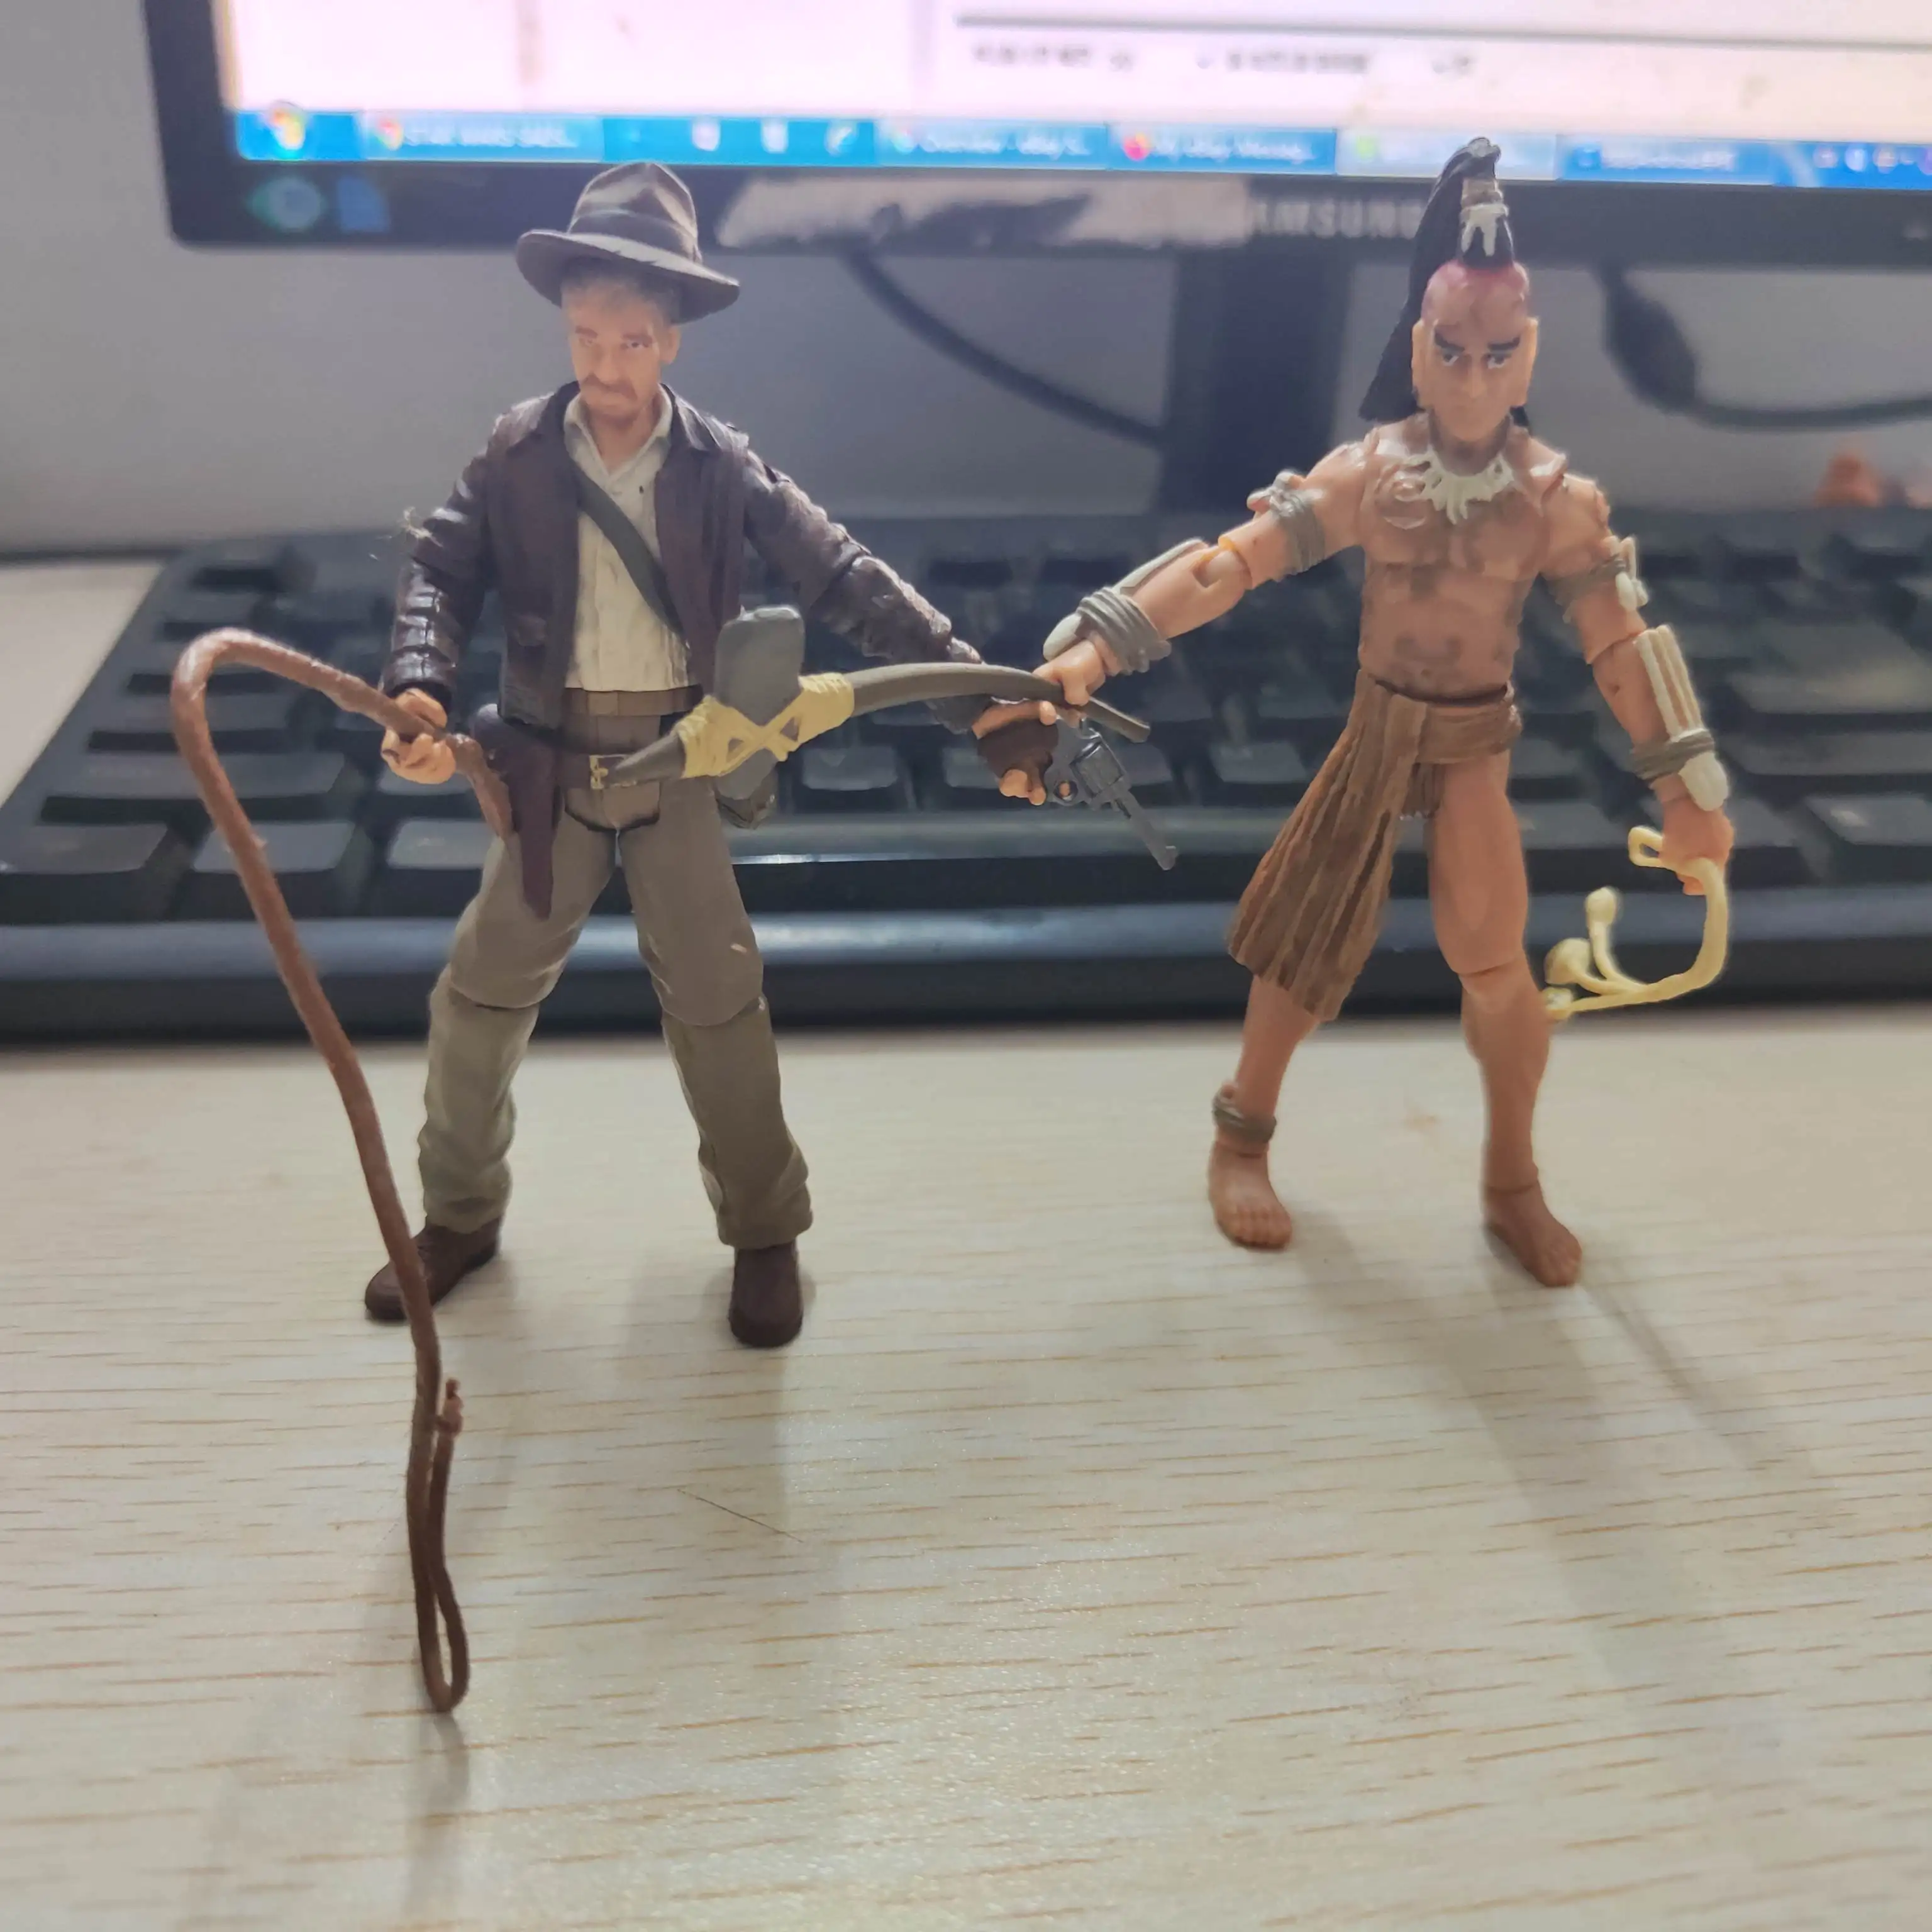 Lot of 2pcs 1:18 Scale Indiana Jones Warrior 3.75" Action Figures Cartoon Doll - $14.34